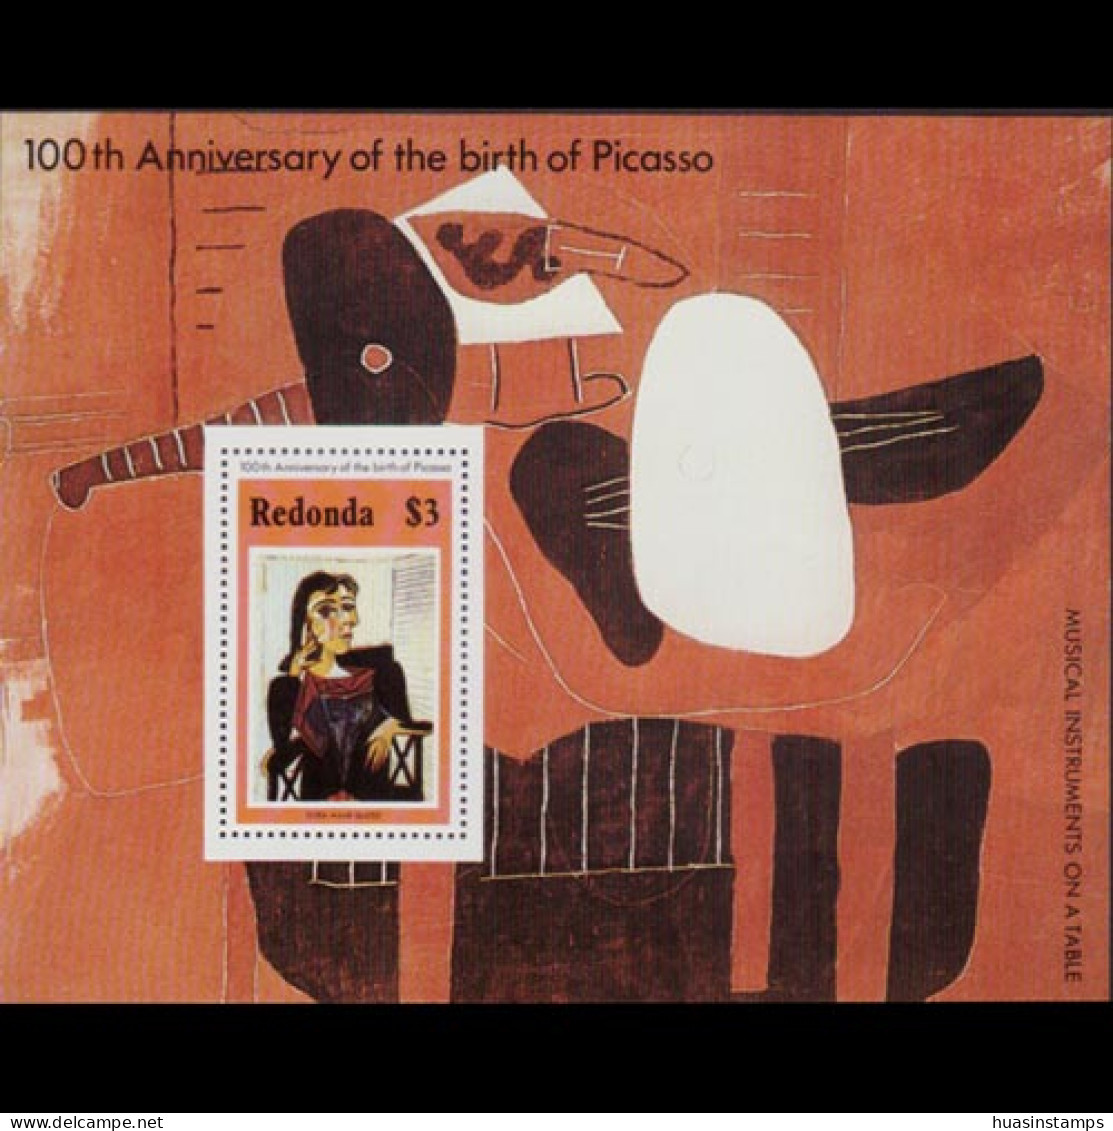 REDONDA 1981 - Picasso Ptgs MNH - Antigua Und Barbuda (1981-...)